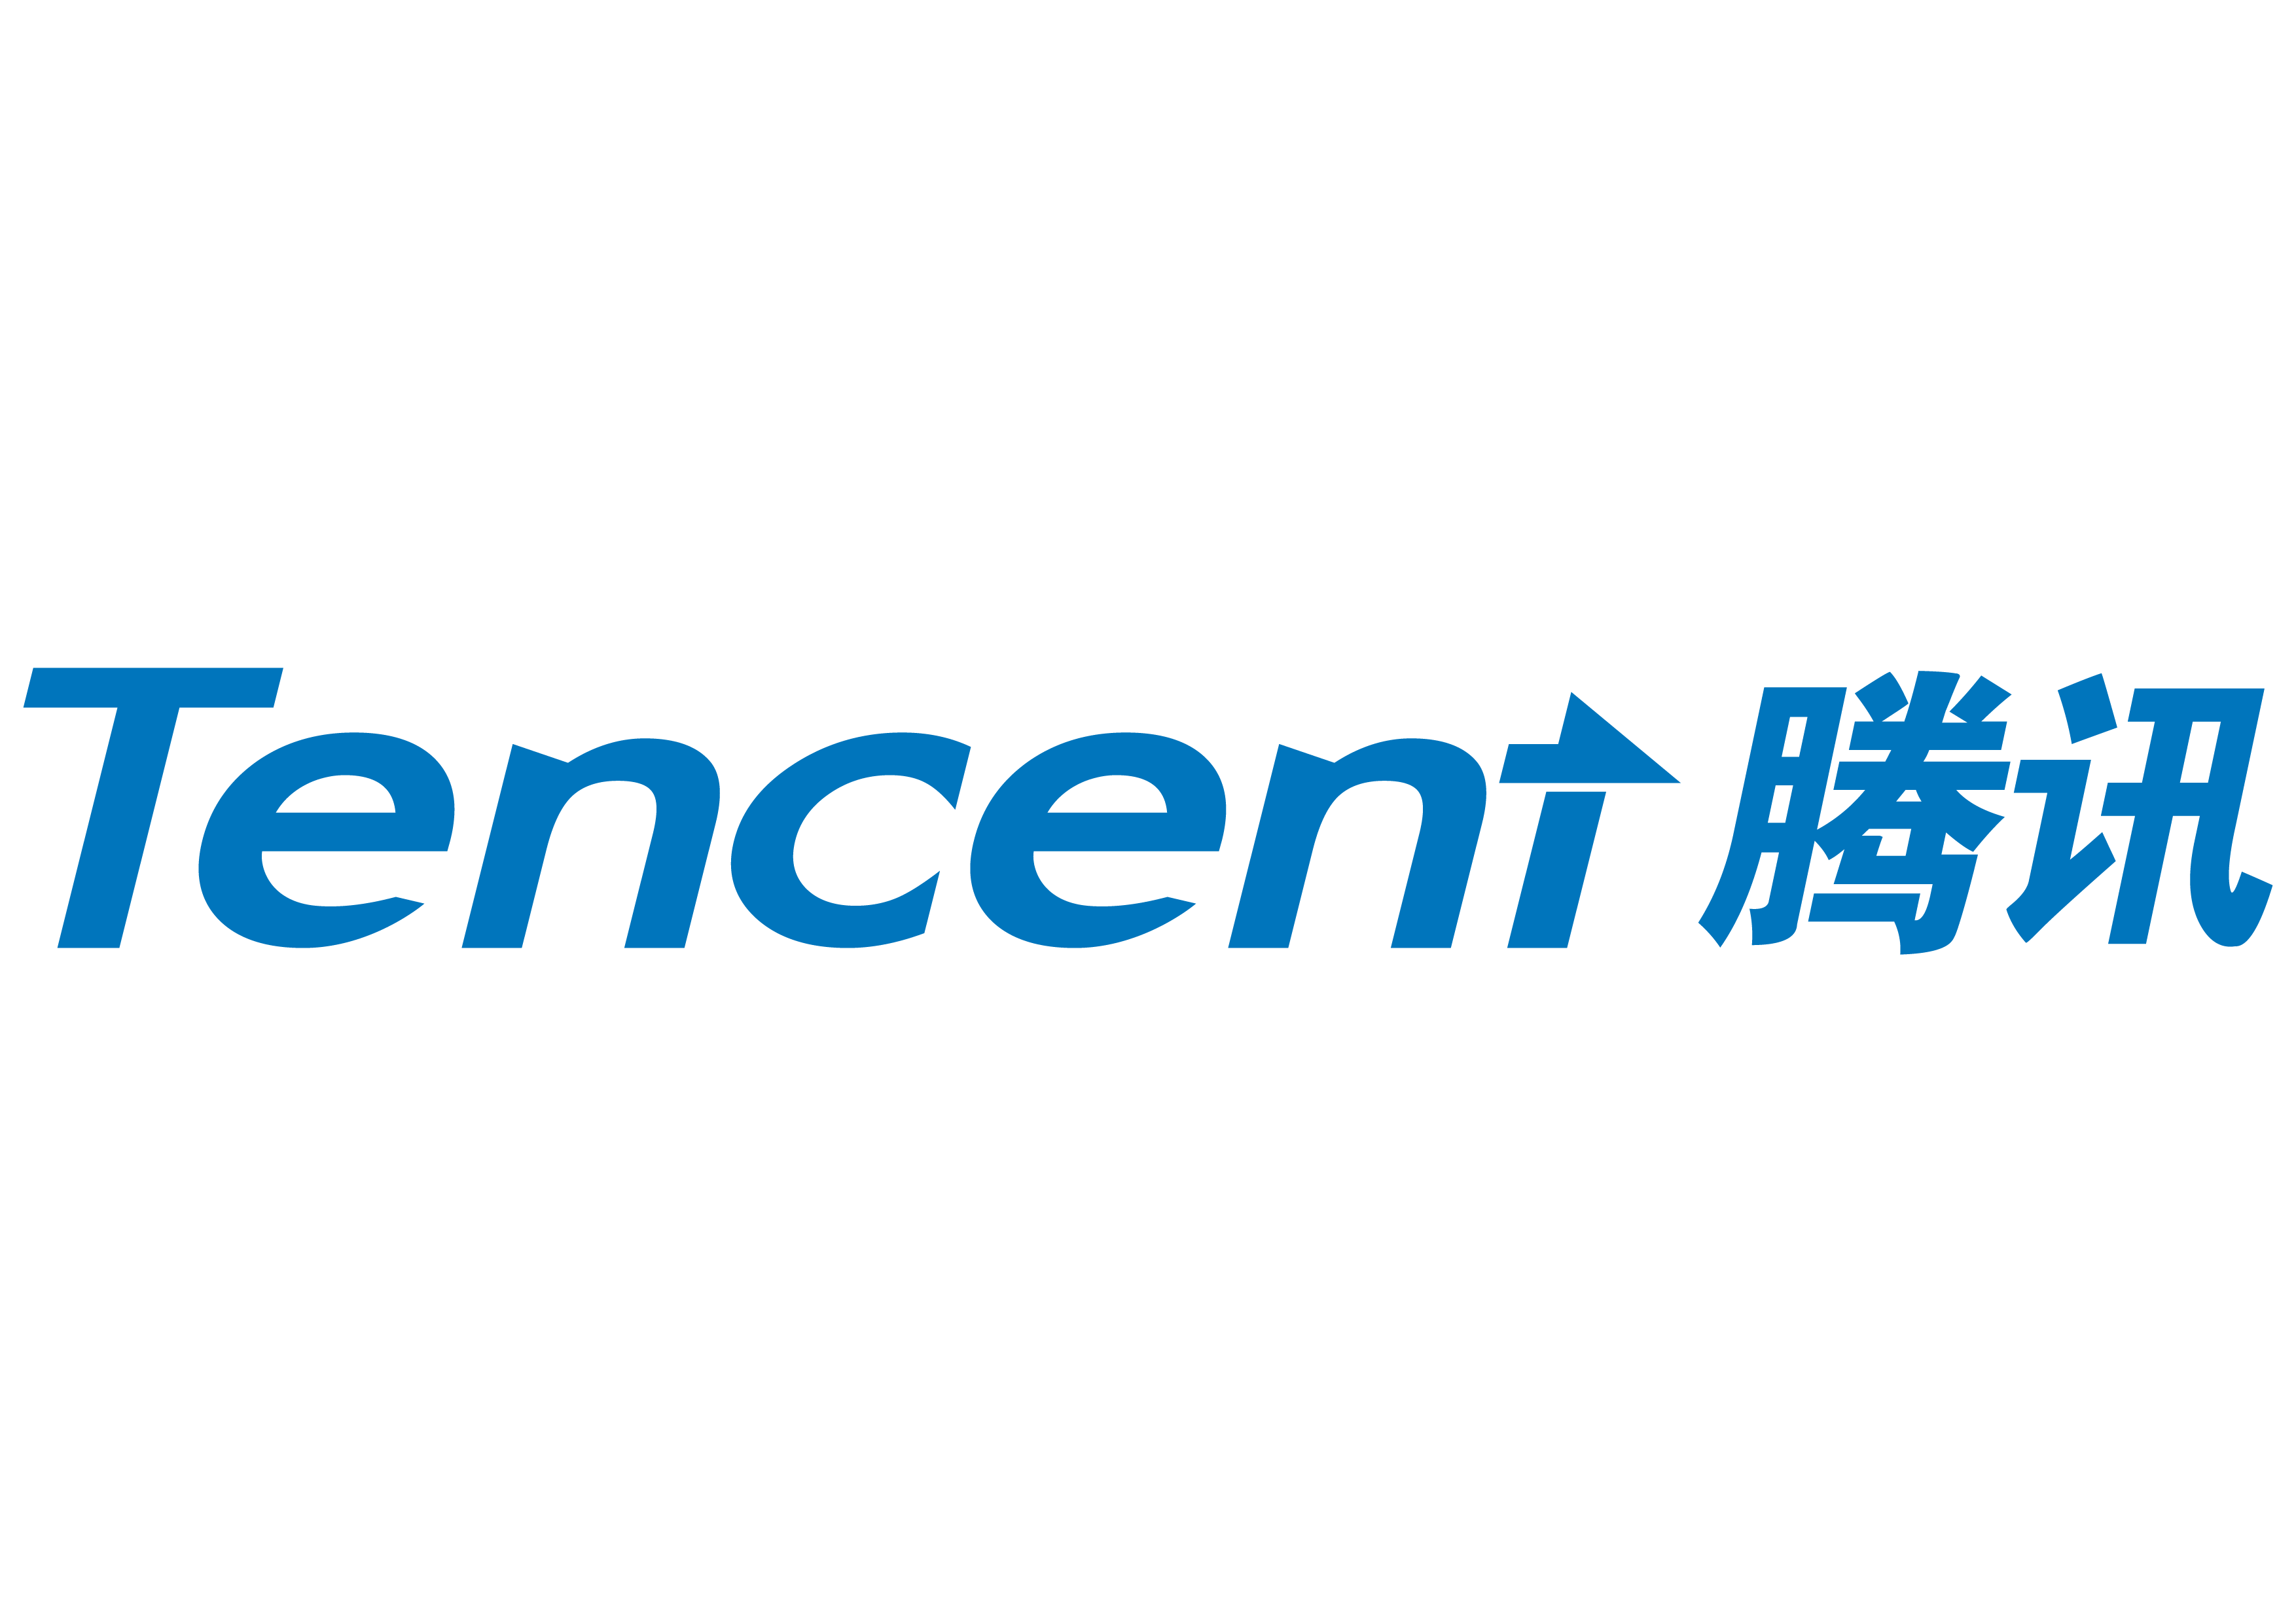 Tencent New Logo - Tencent Logo PNG Transparent Tencent Logo.PNG Images. | PlusPNG